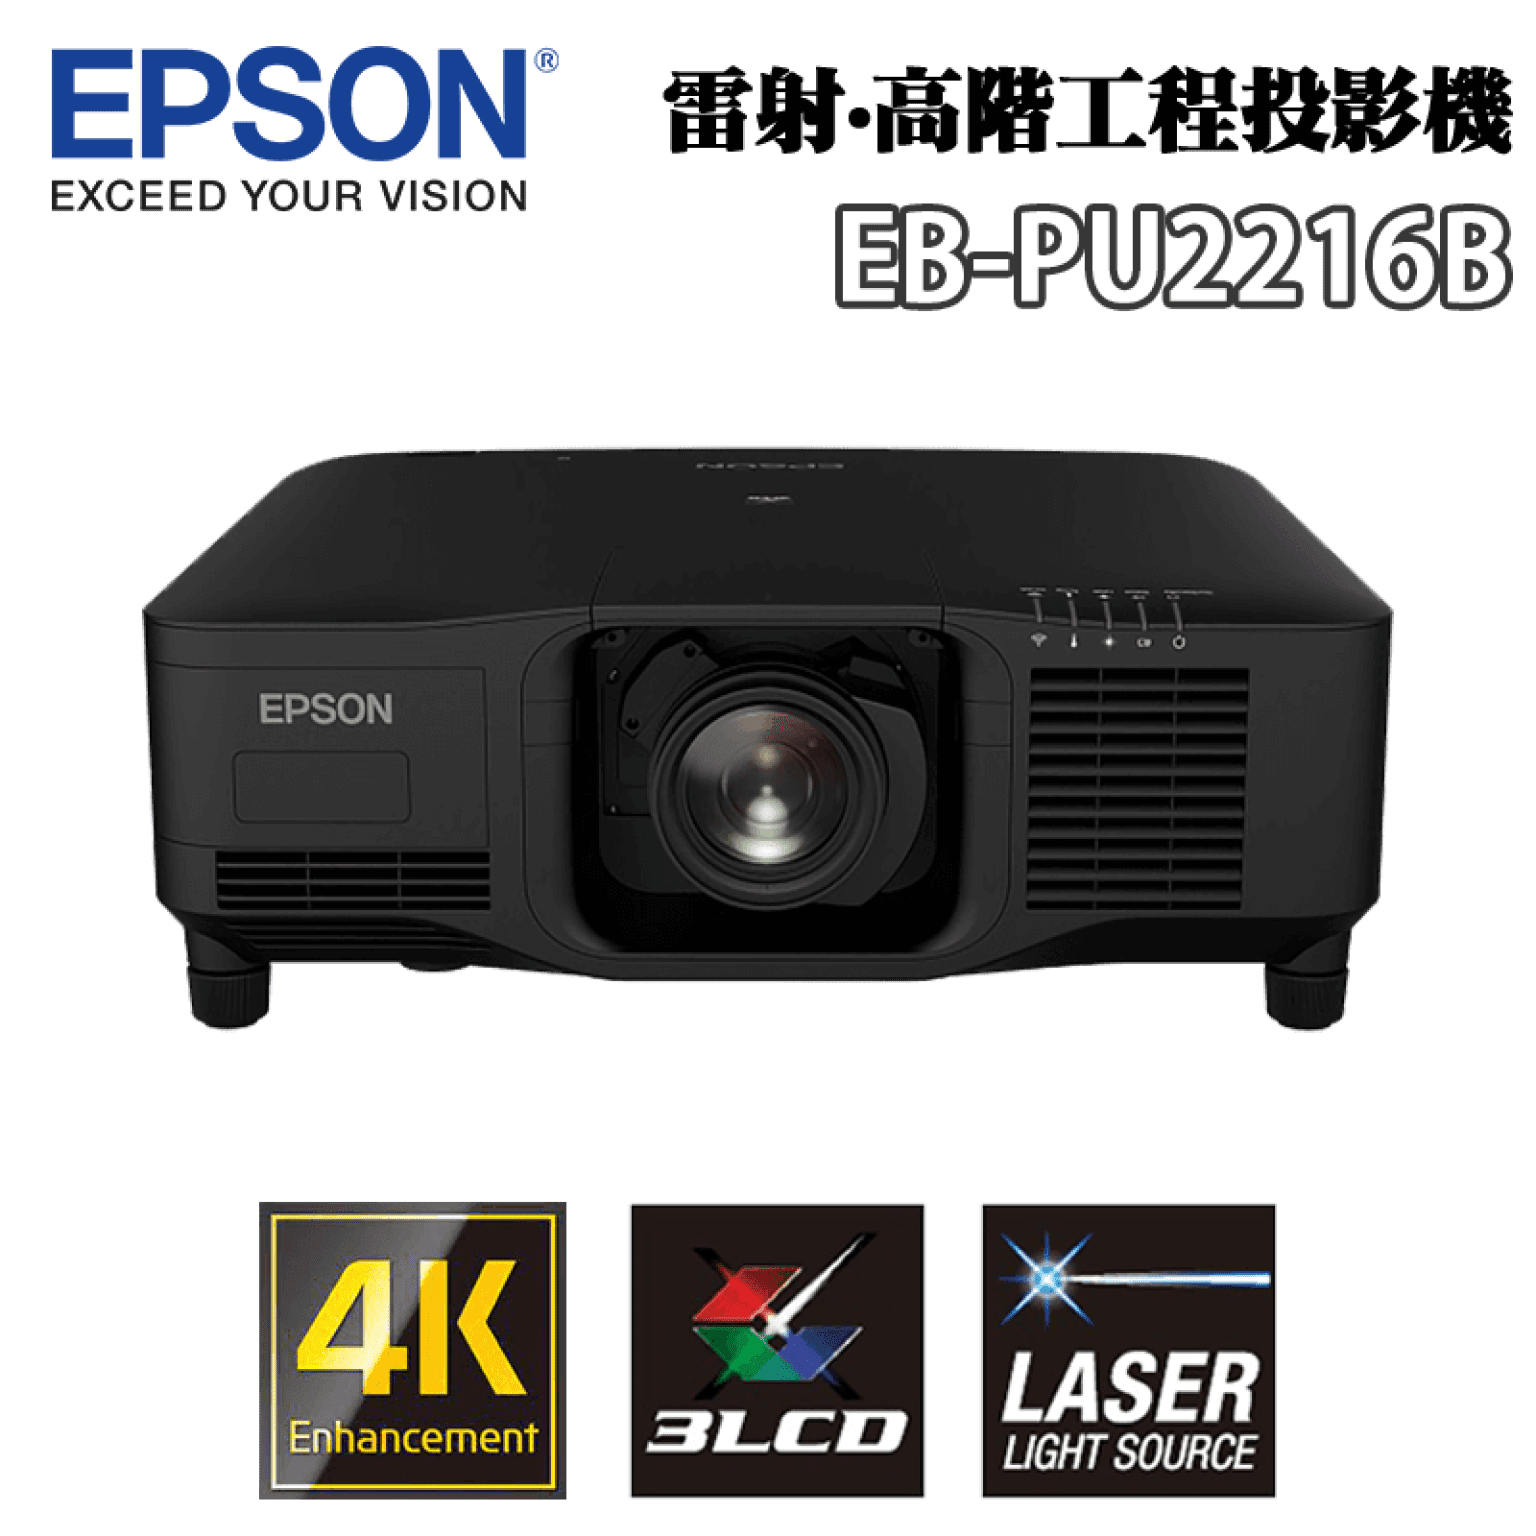 EPSON-EB-PU2216B-Main-1536x1536.png